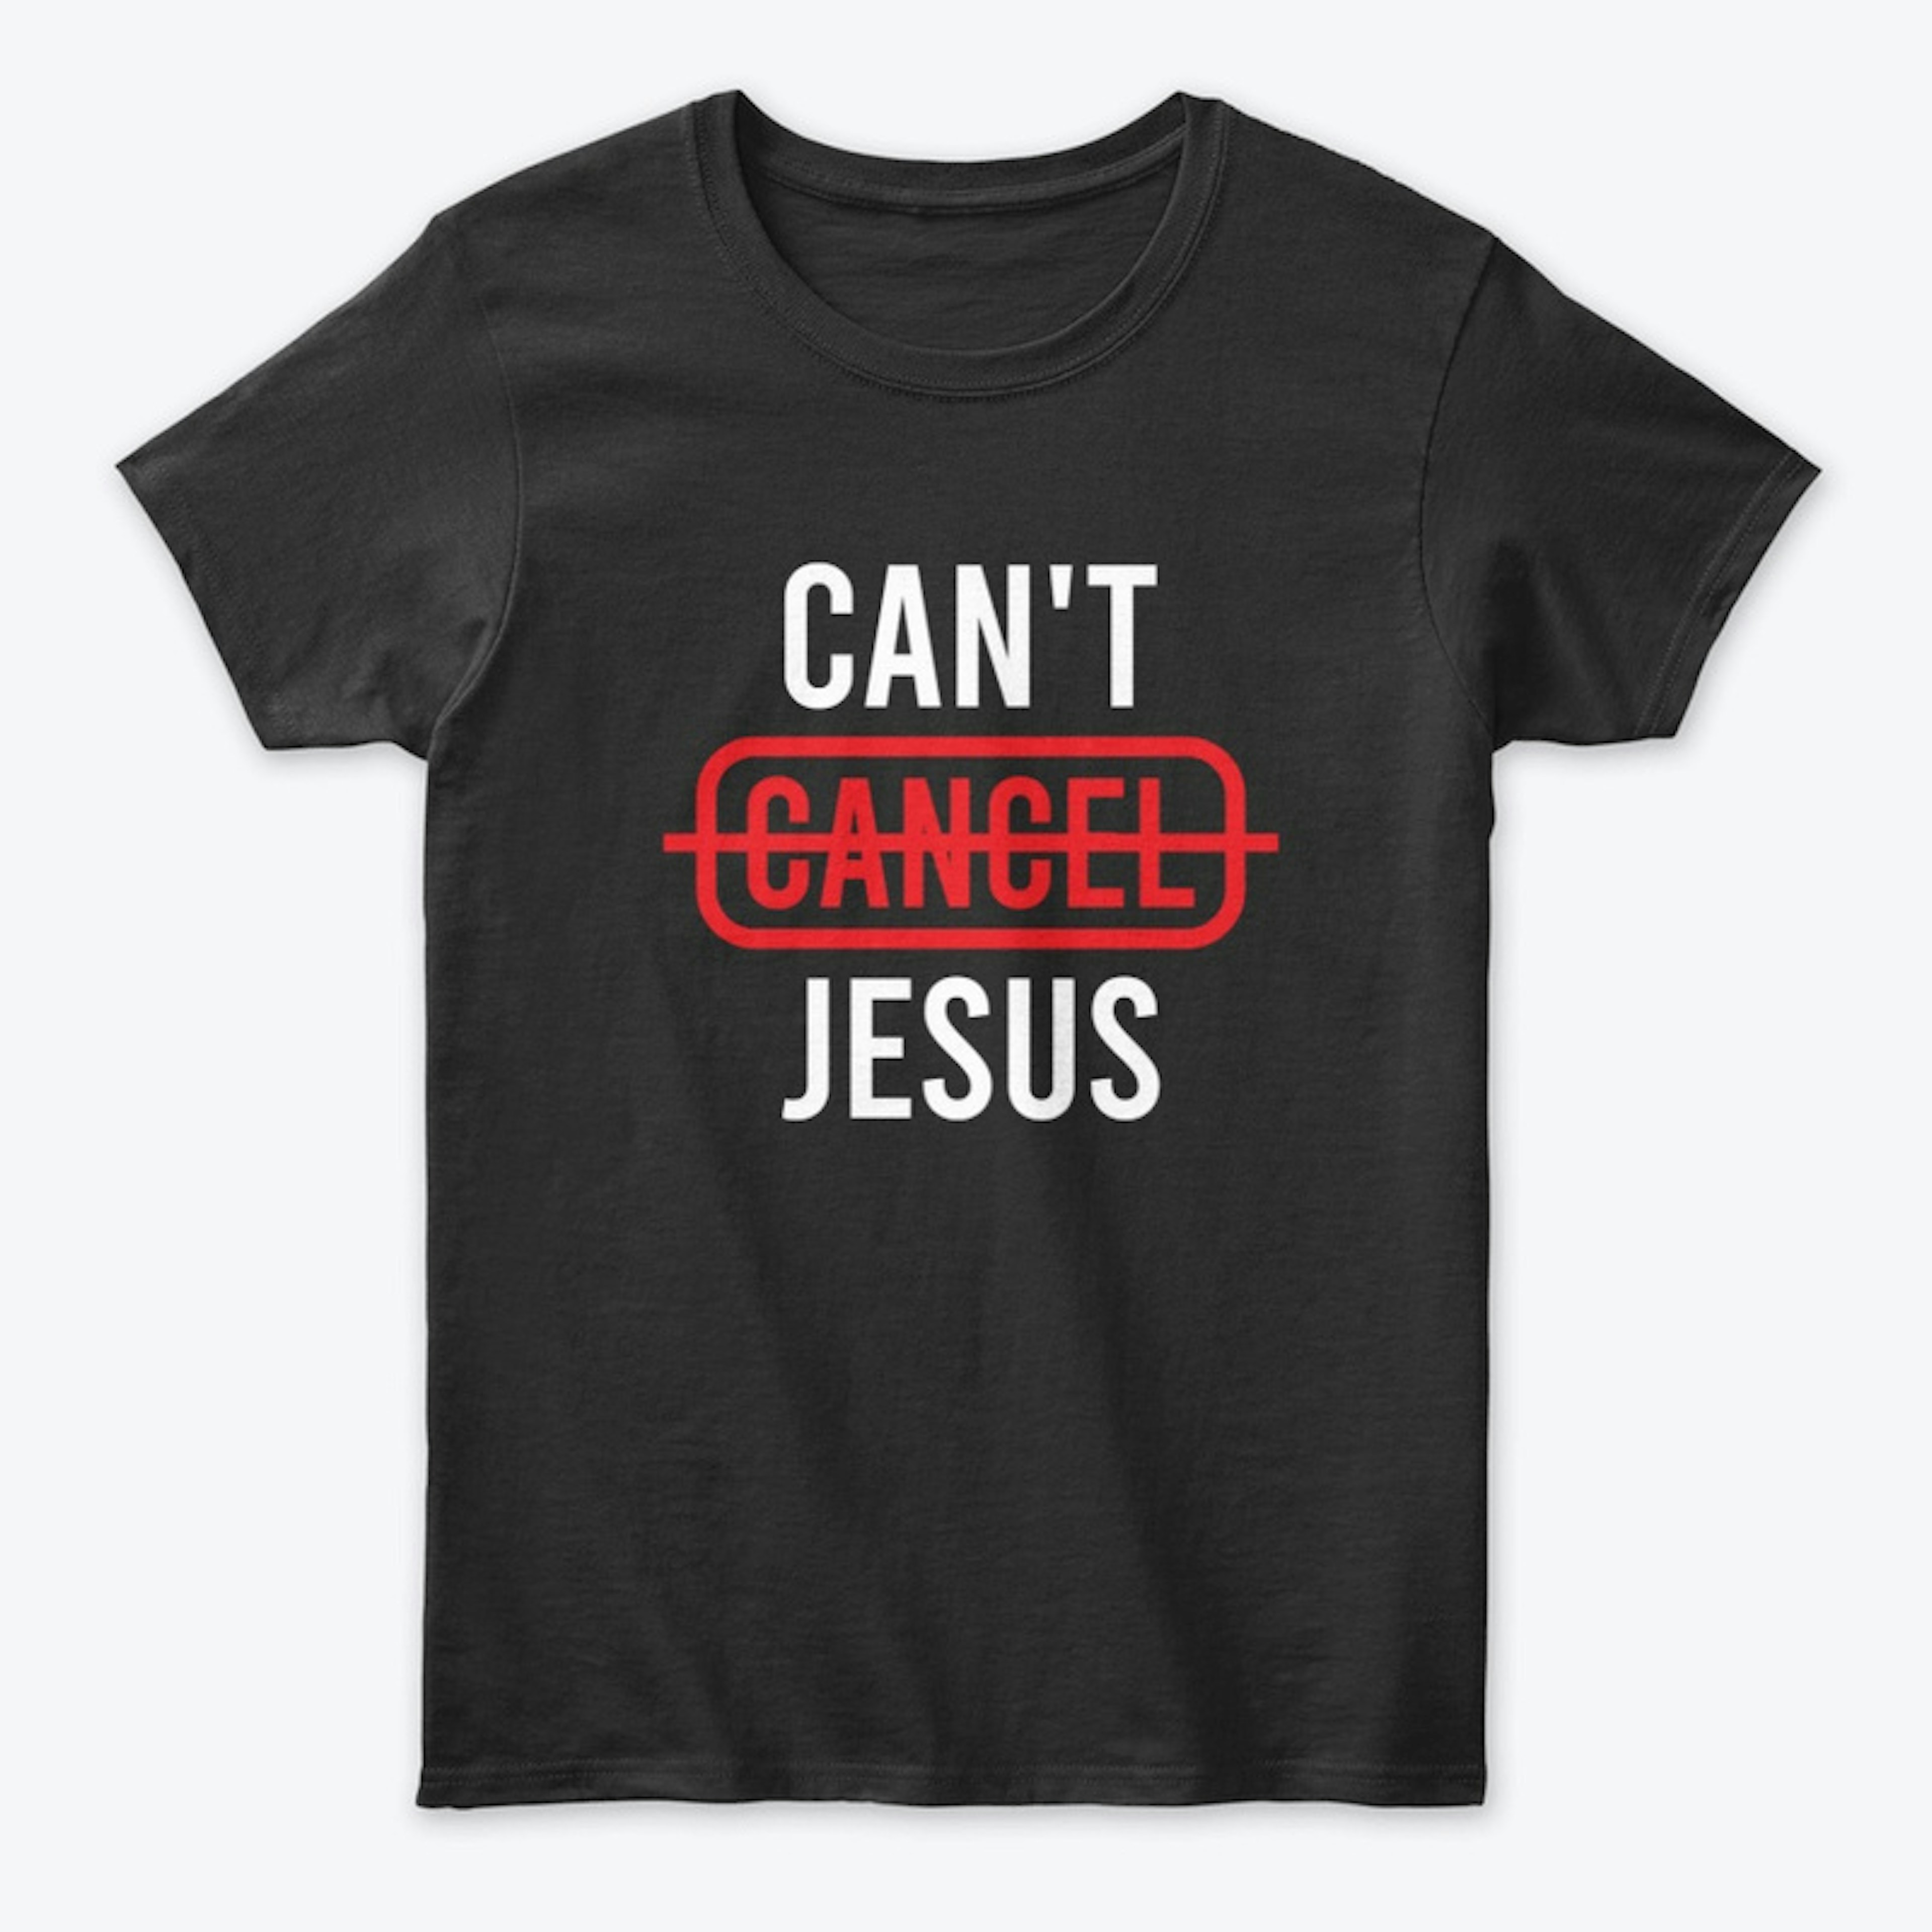 Can't Cancel Jesus